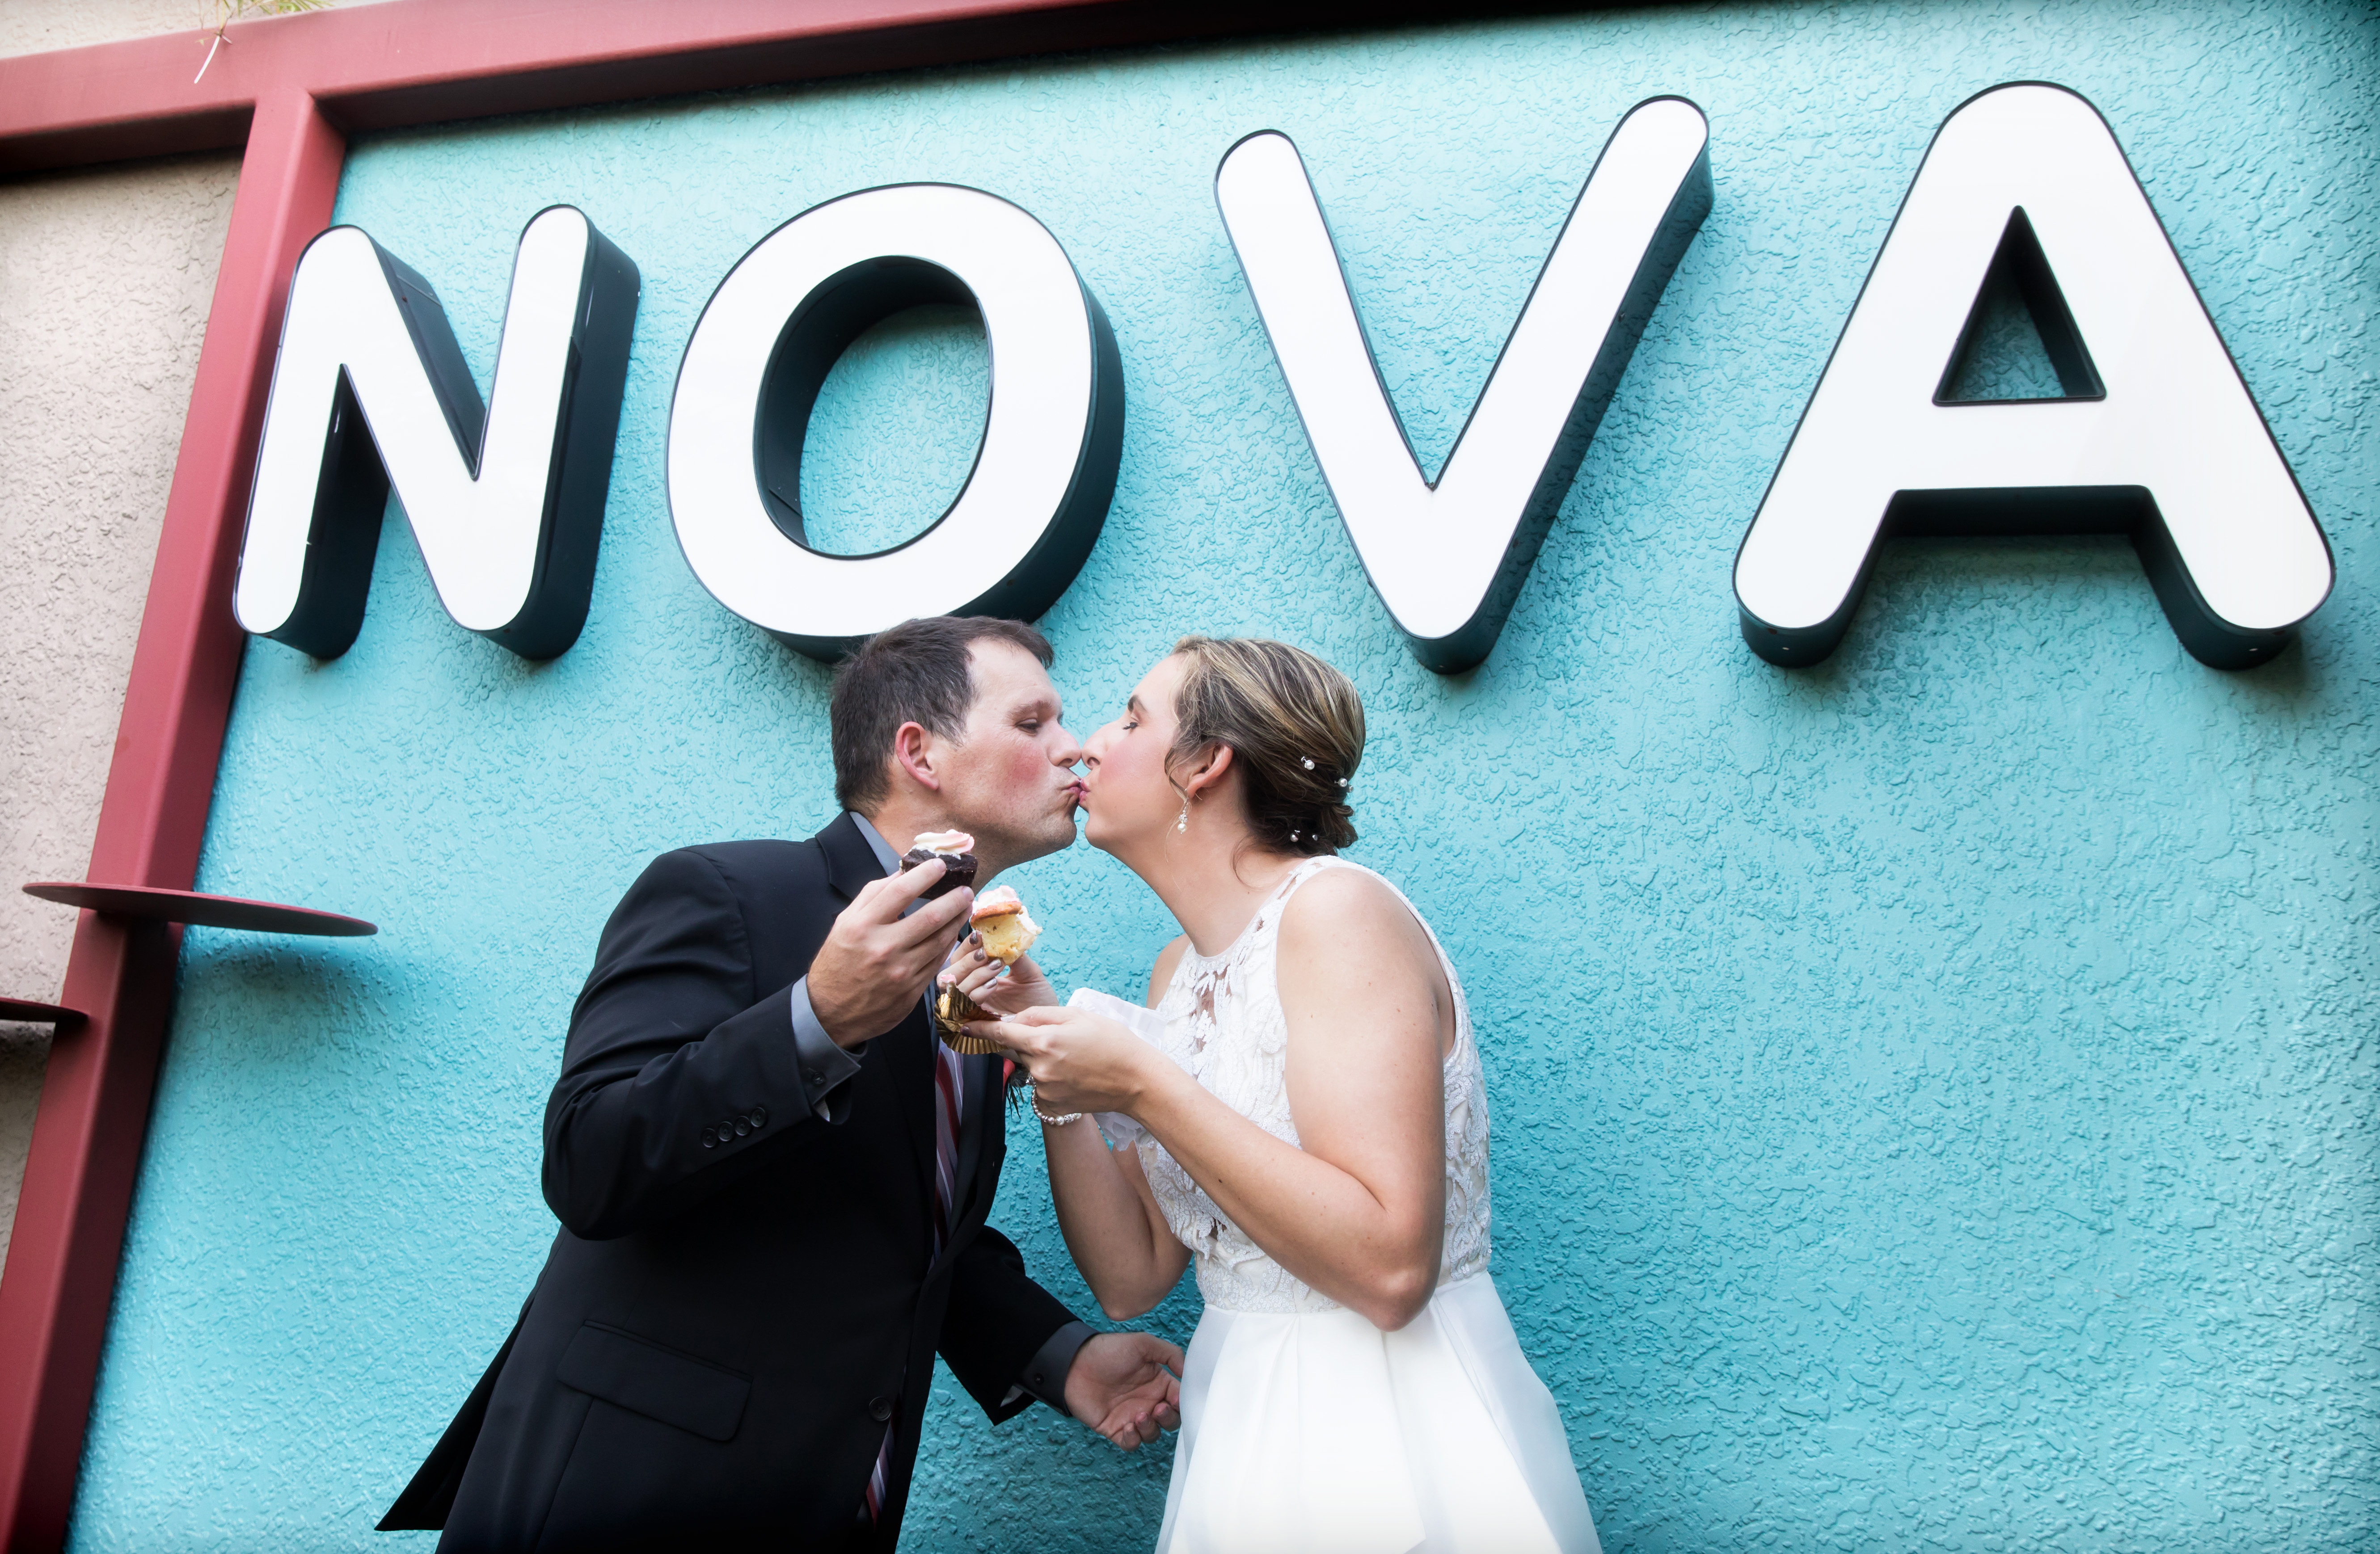 Newlyweds enjoy cupcake at NOVA 535 during their vintage St. Petersburg wedding